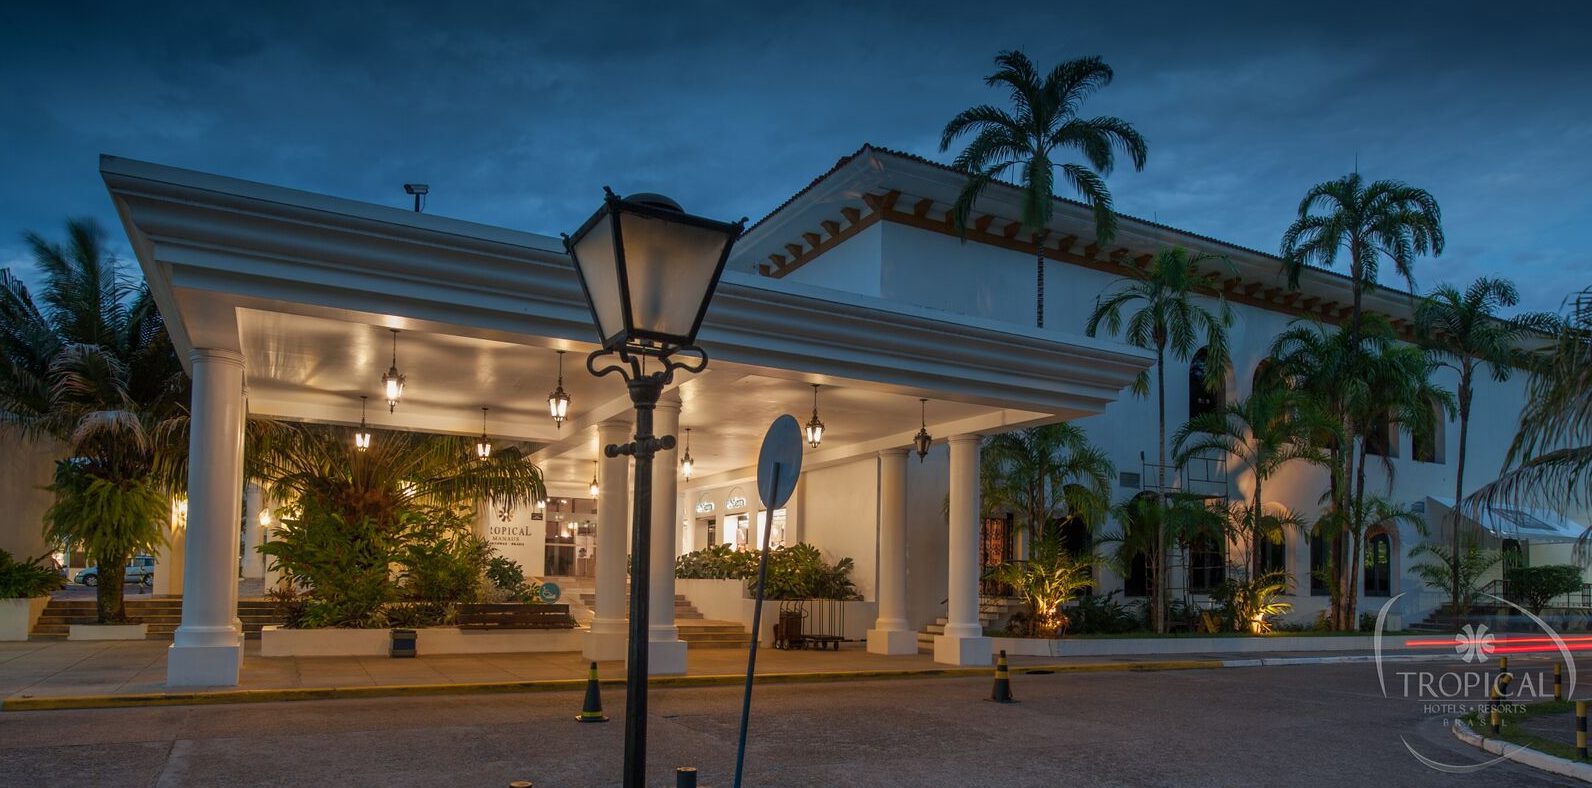 The beautiful façade of the hotel tropical Manaus eco- resort.